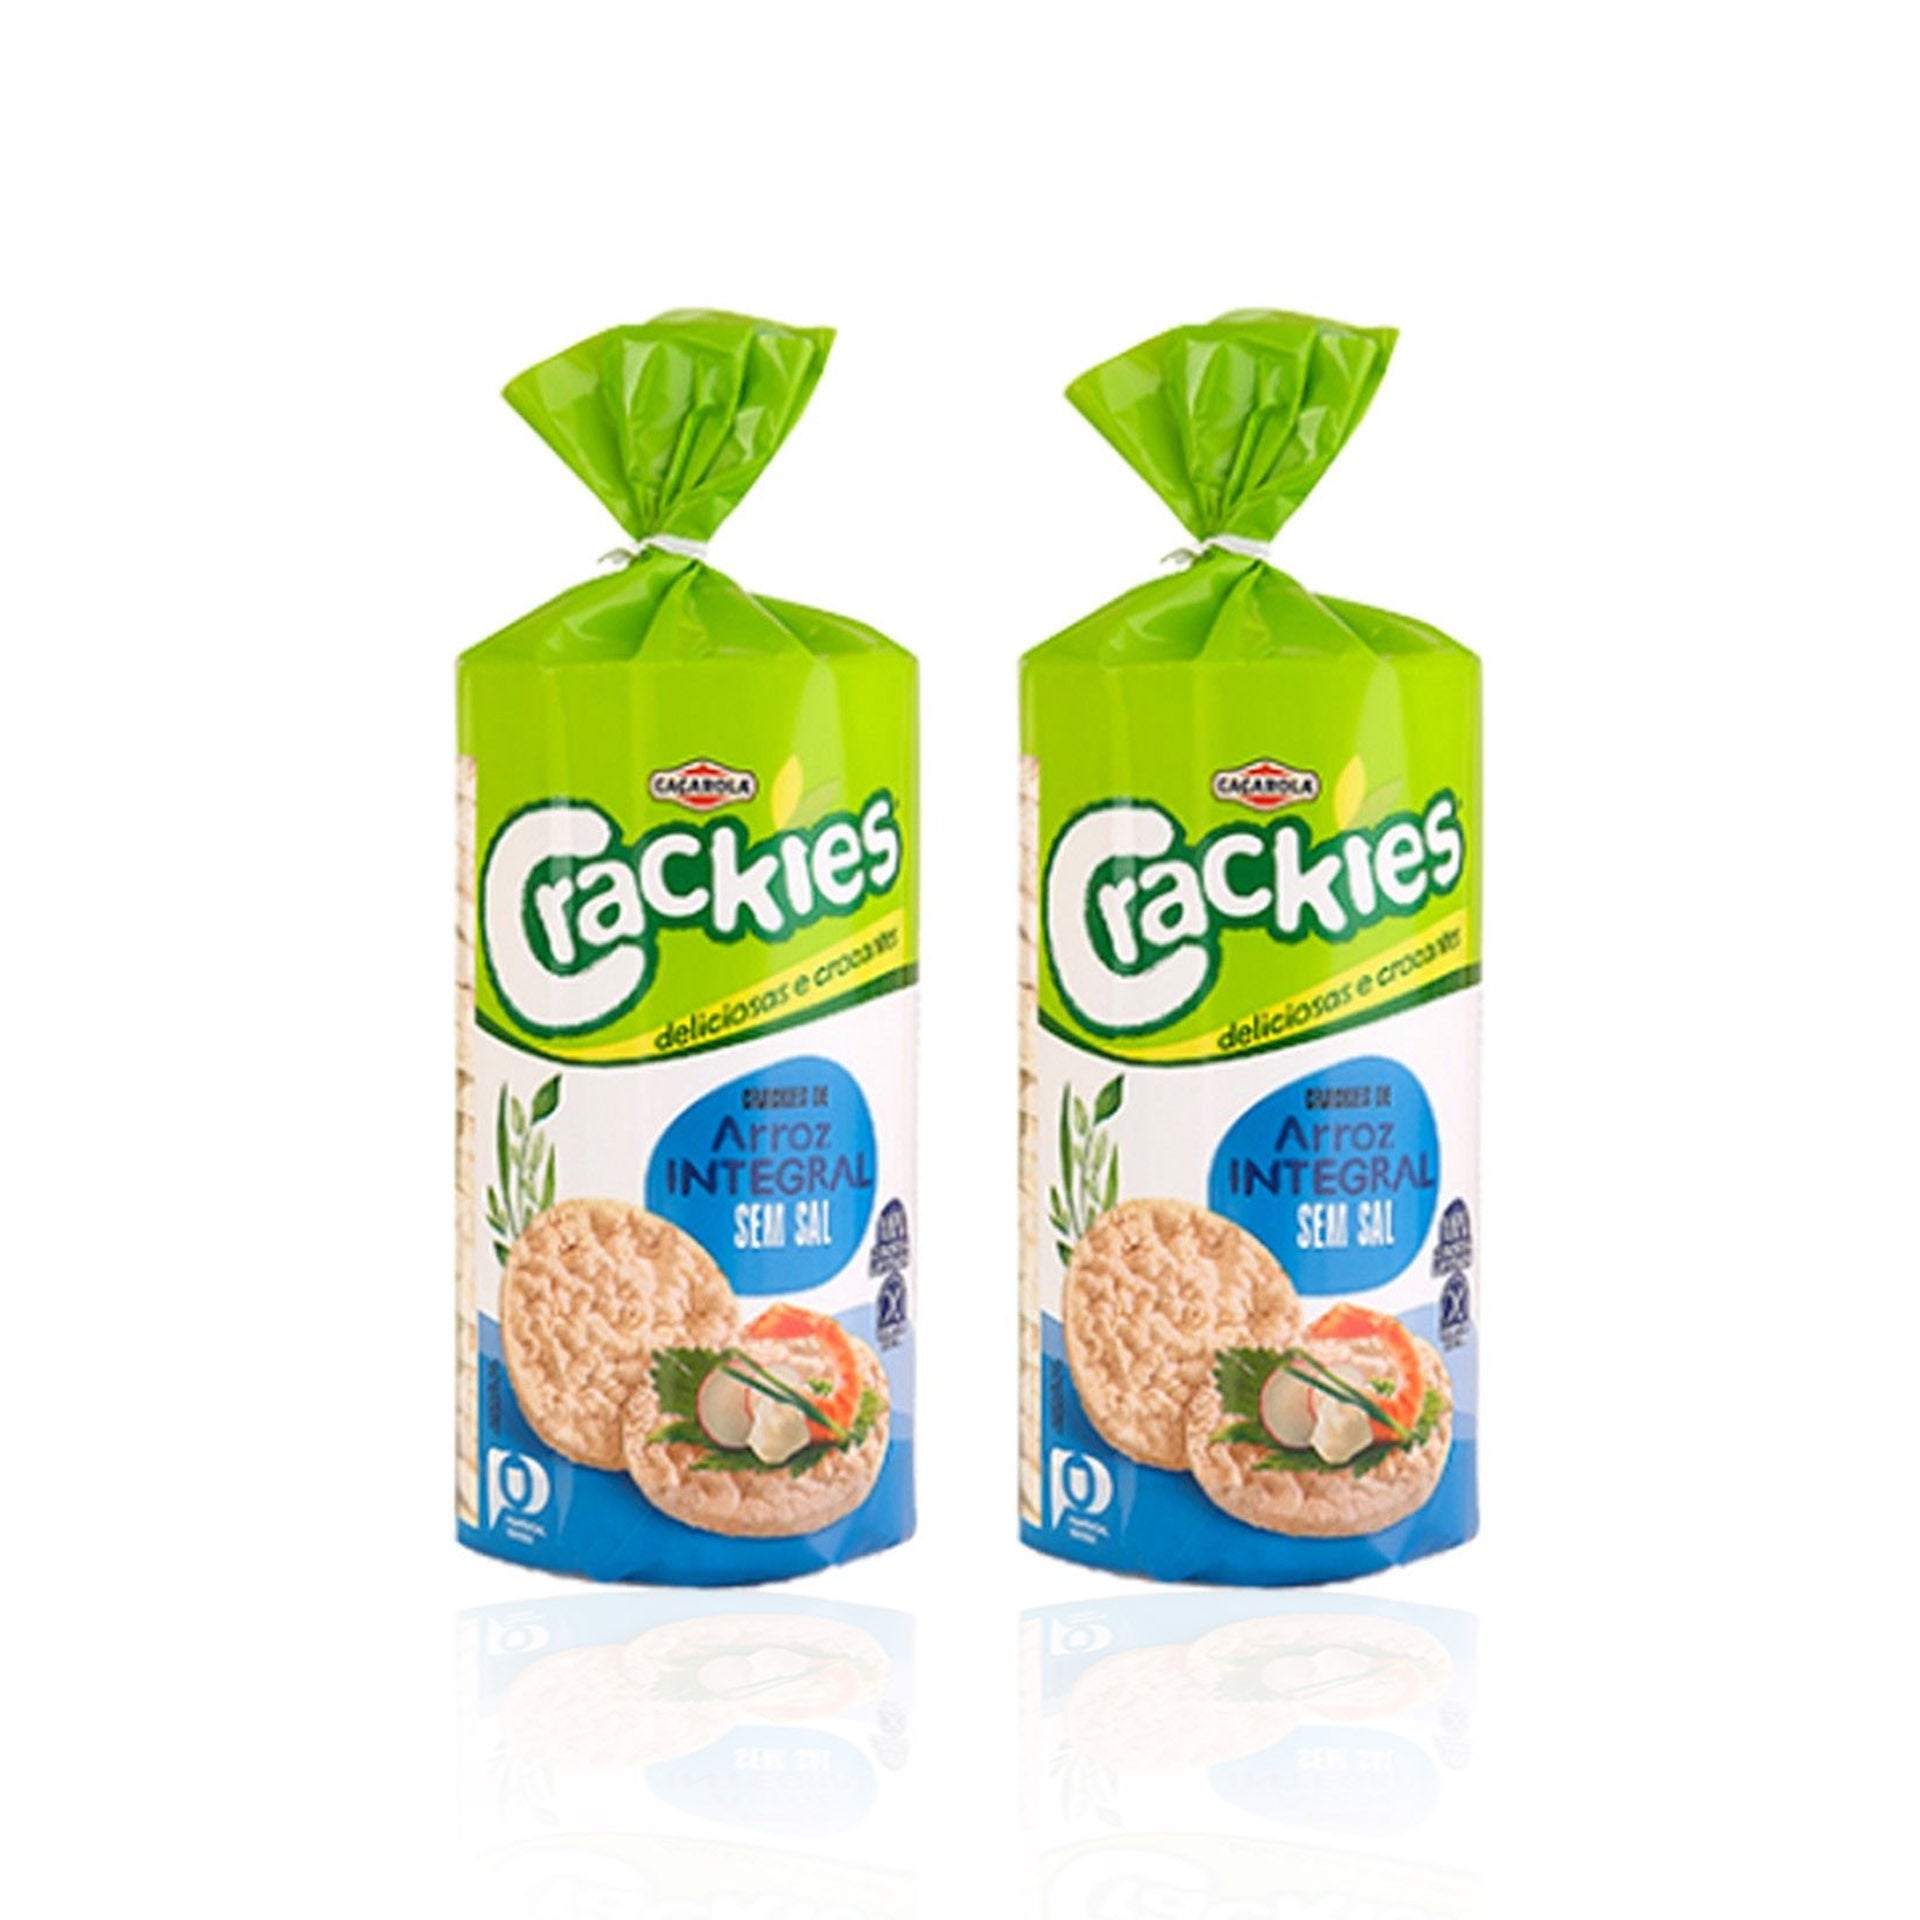 Crackies Arroz Integral s/ Sal 130 gr - Pack 2 x 130 gr